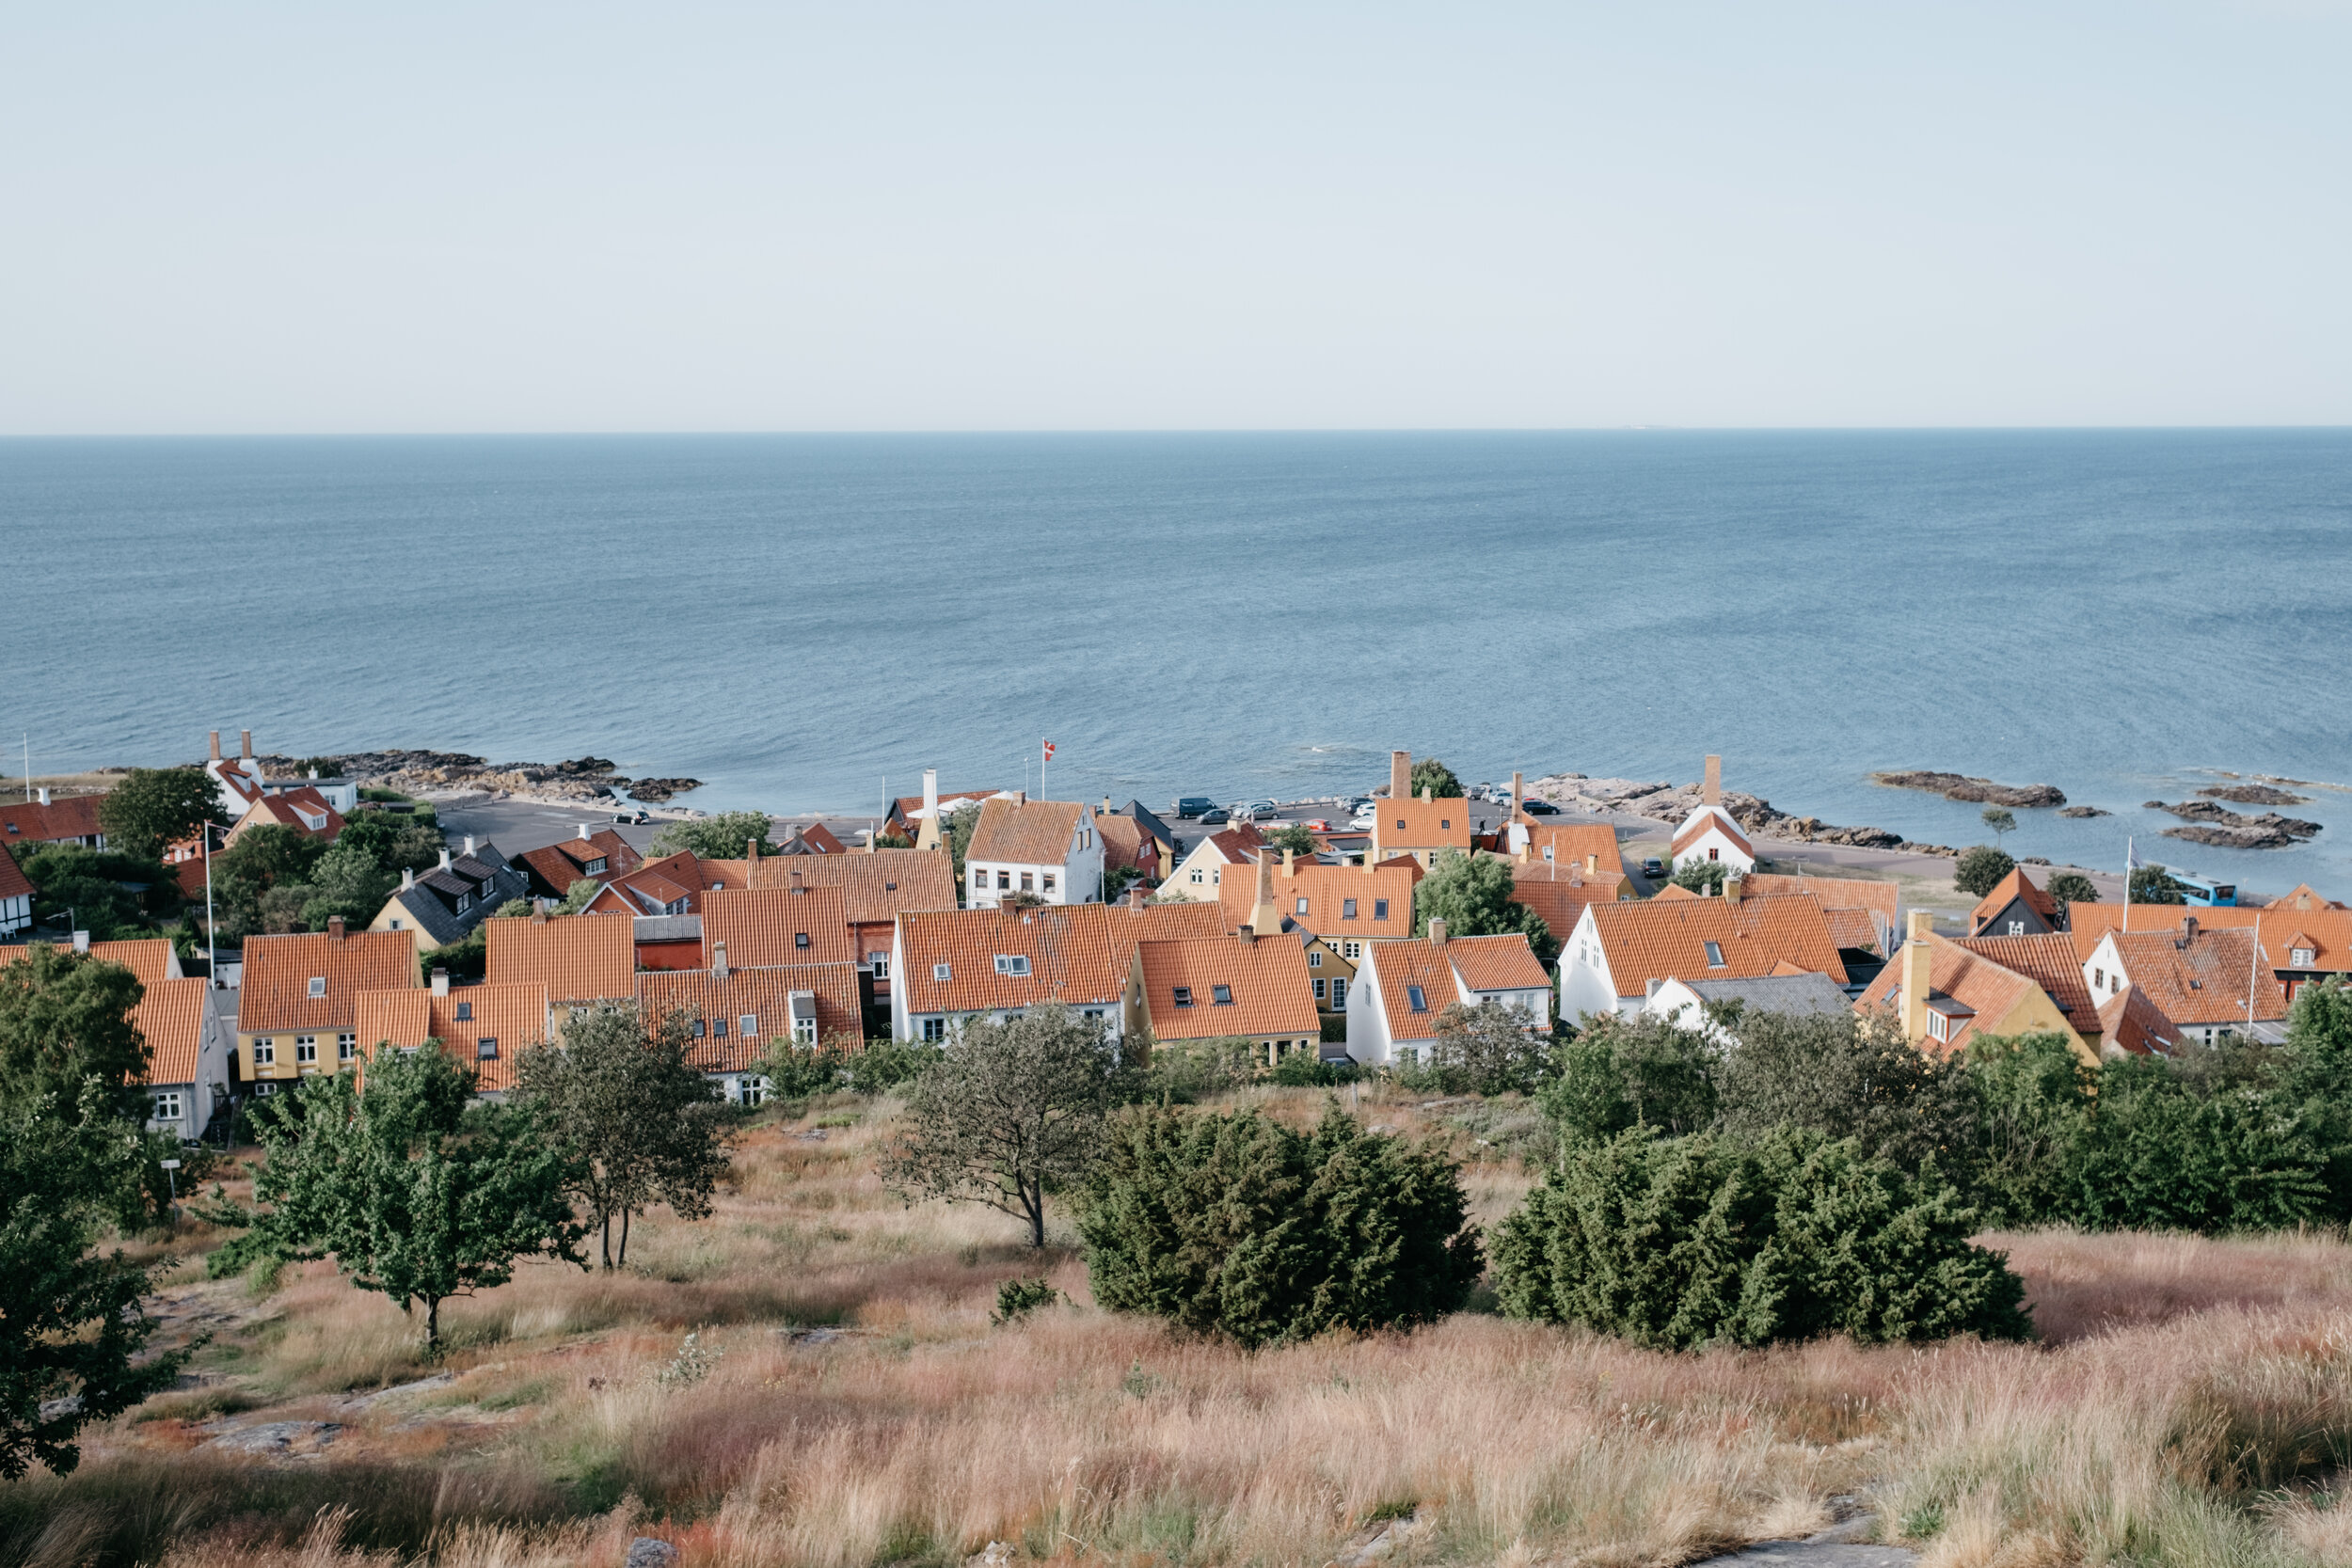 A quiet, coastal town in Scandinavia